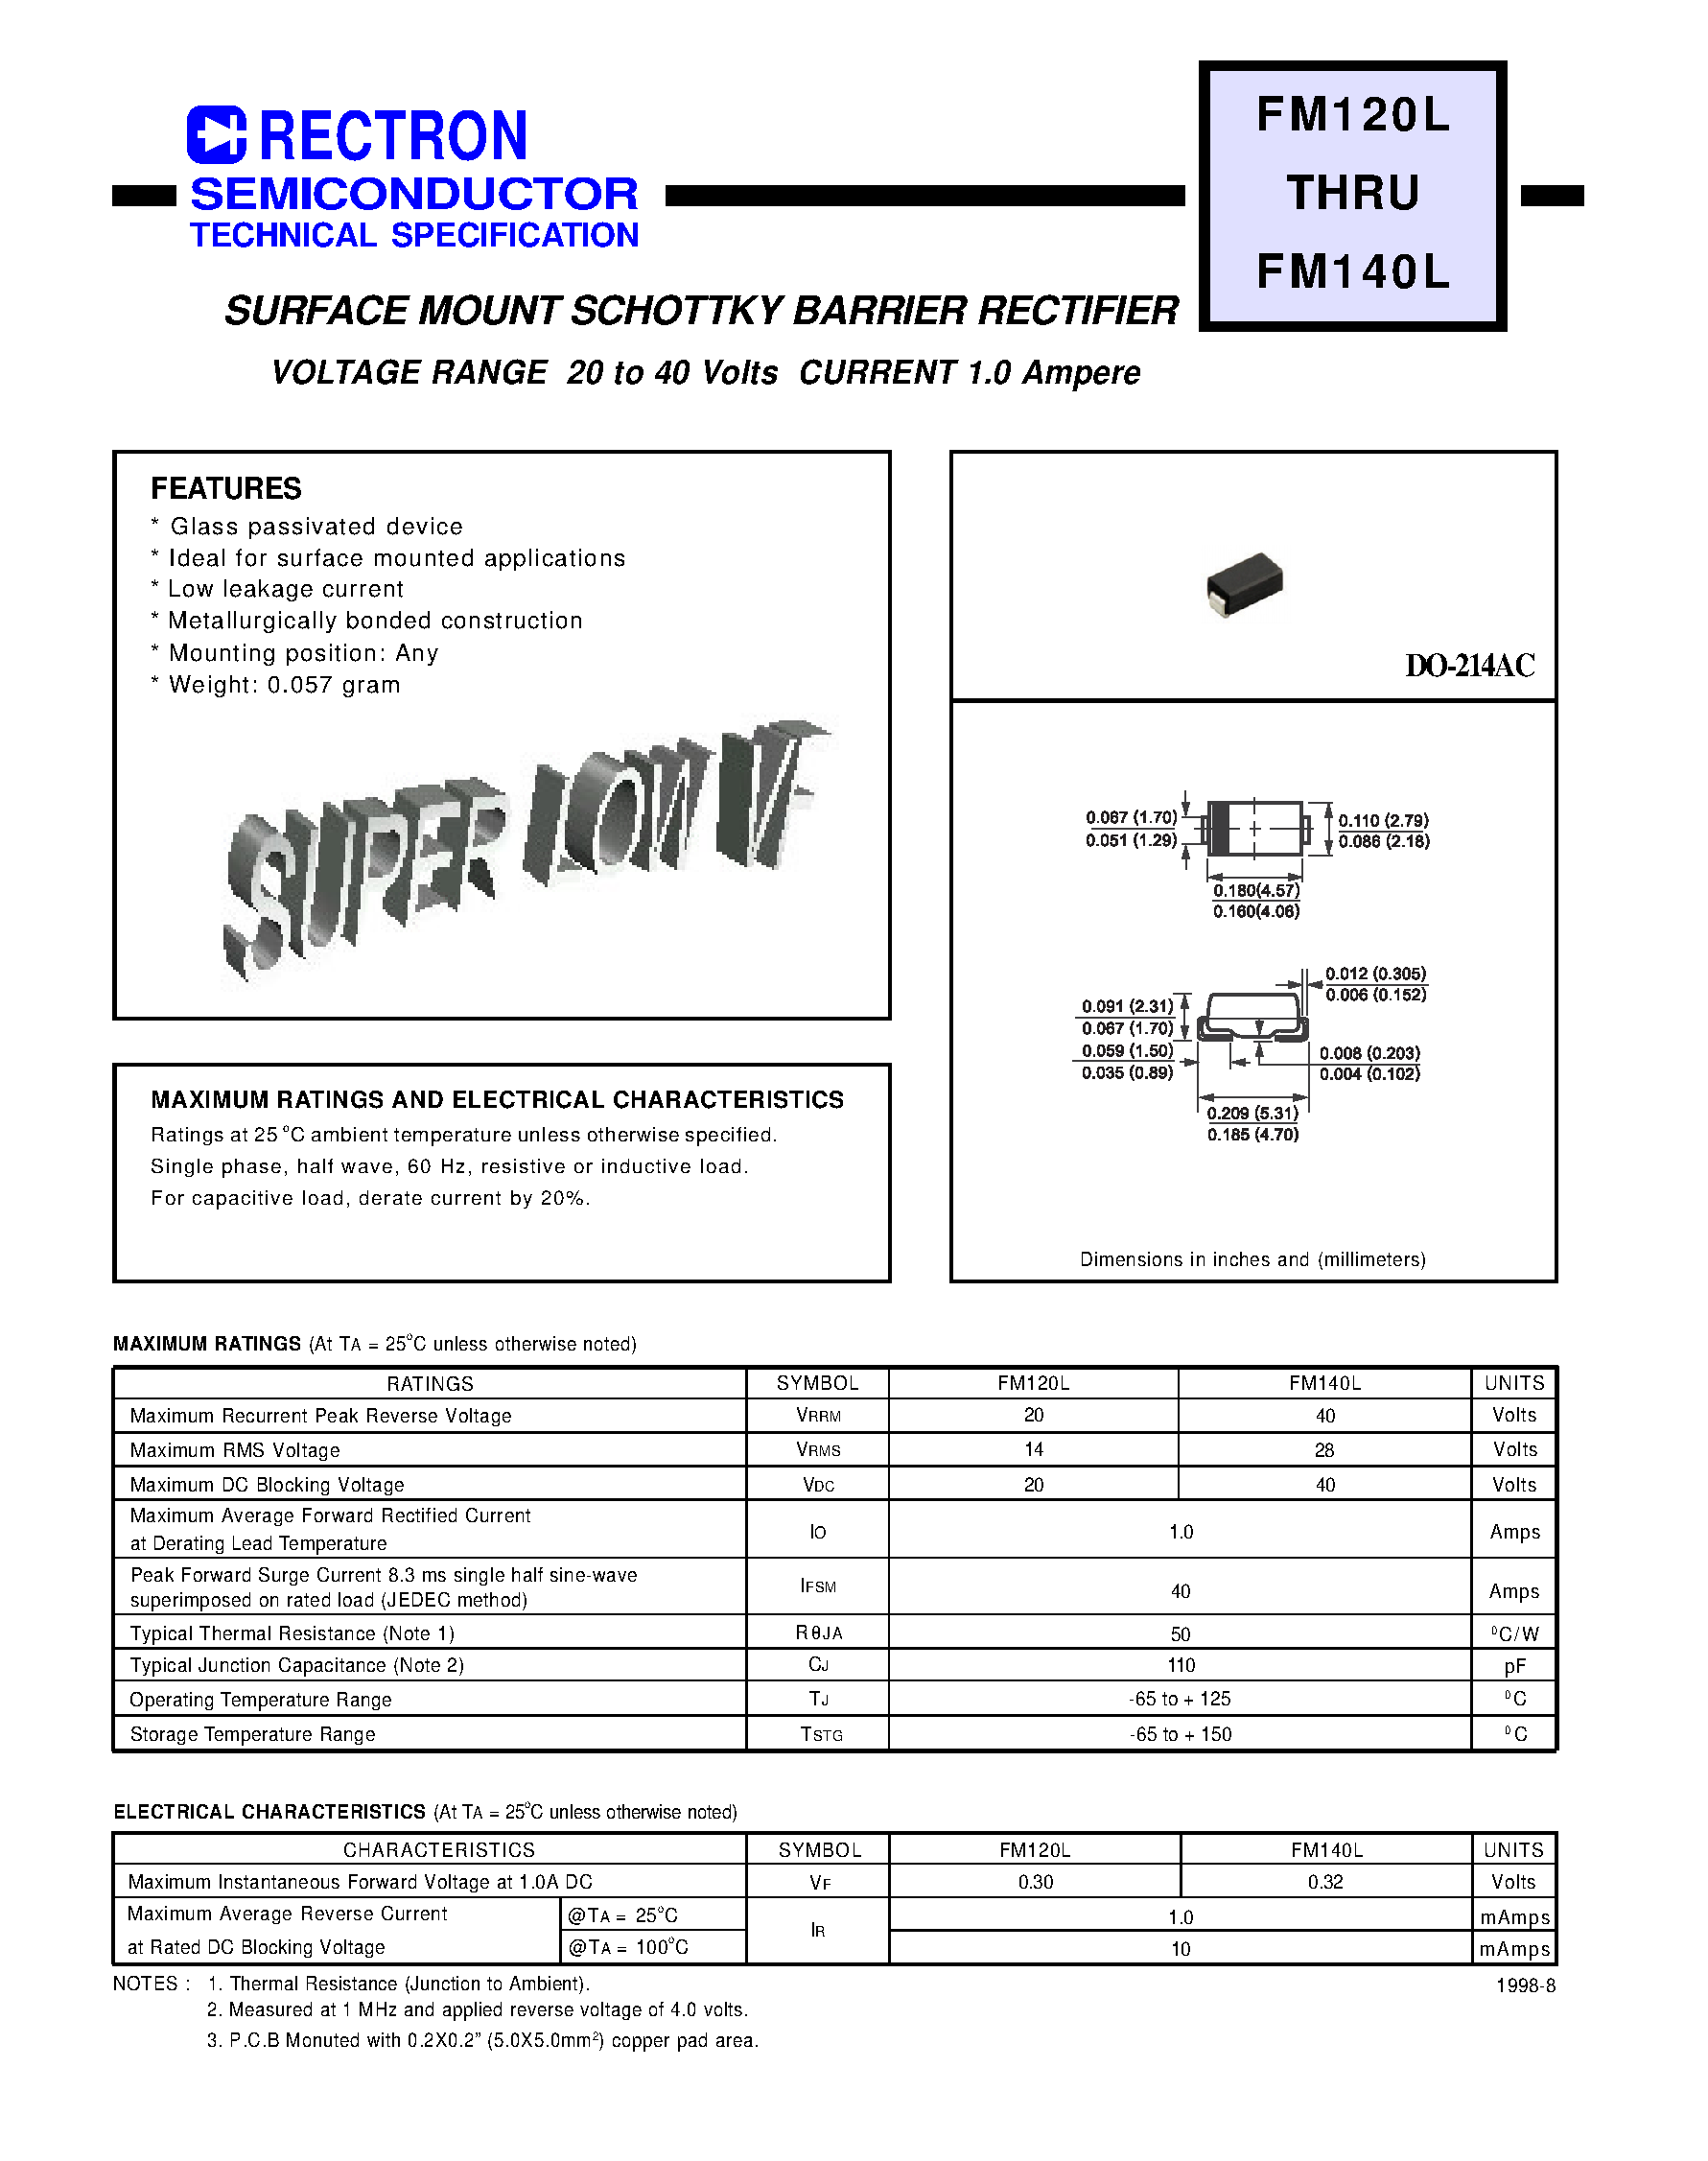 Datasheet FM140L - SURFACE MOUNT SCHOTTKY BARRIER RECTIFIER (VOLTAGE RANGE 20 to 40 Volts CURRENT 1.0 Ampere) page 1